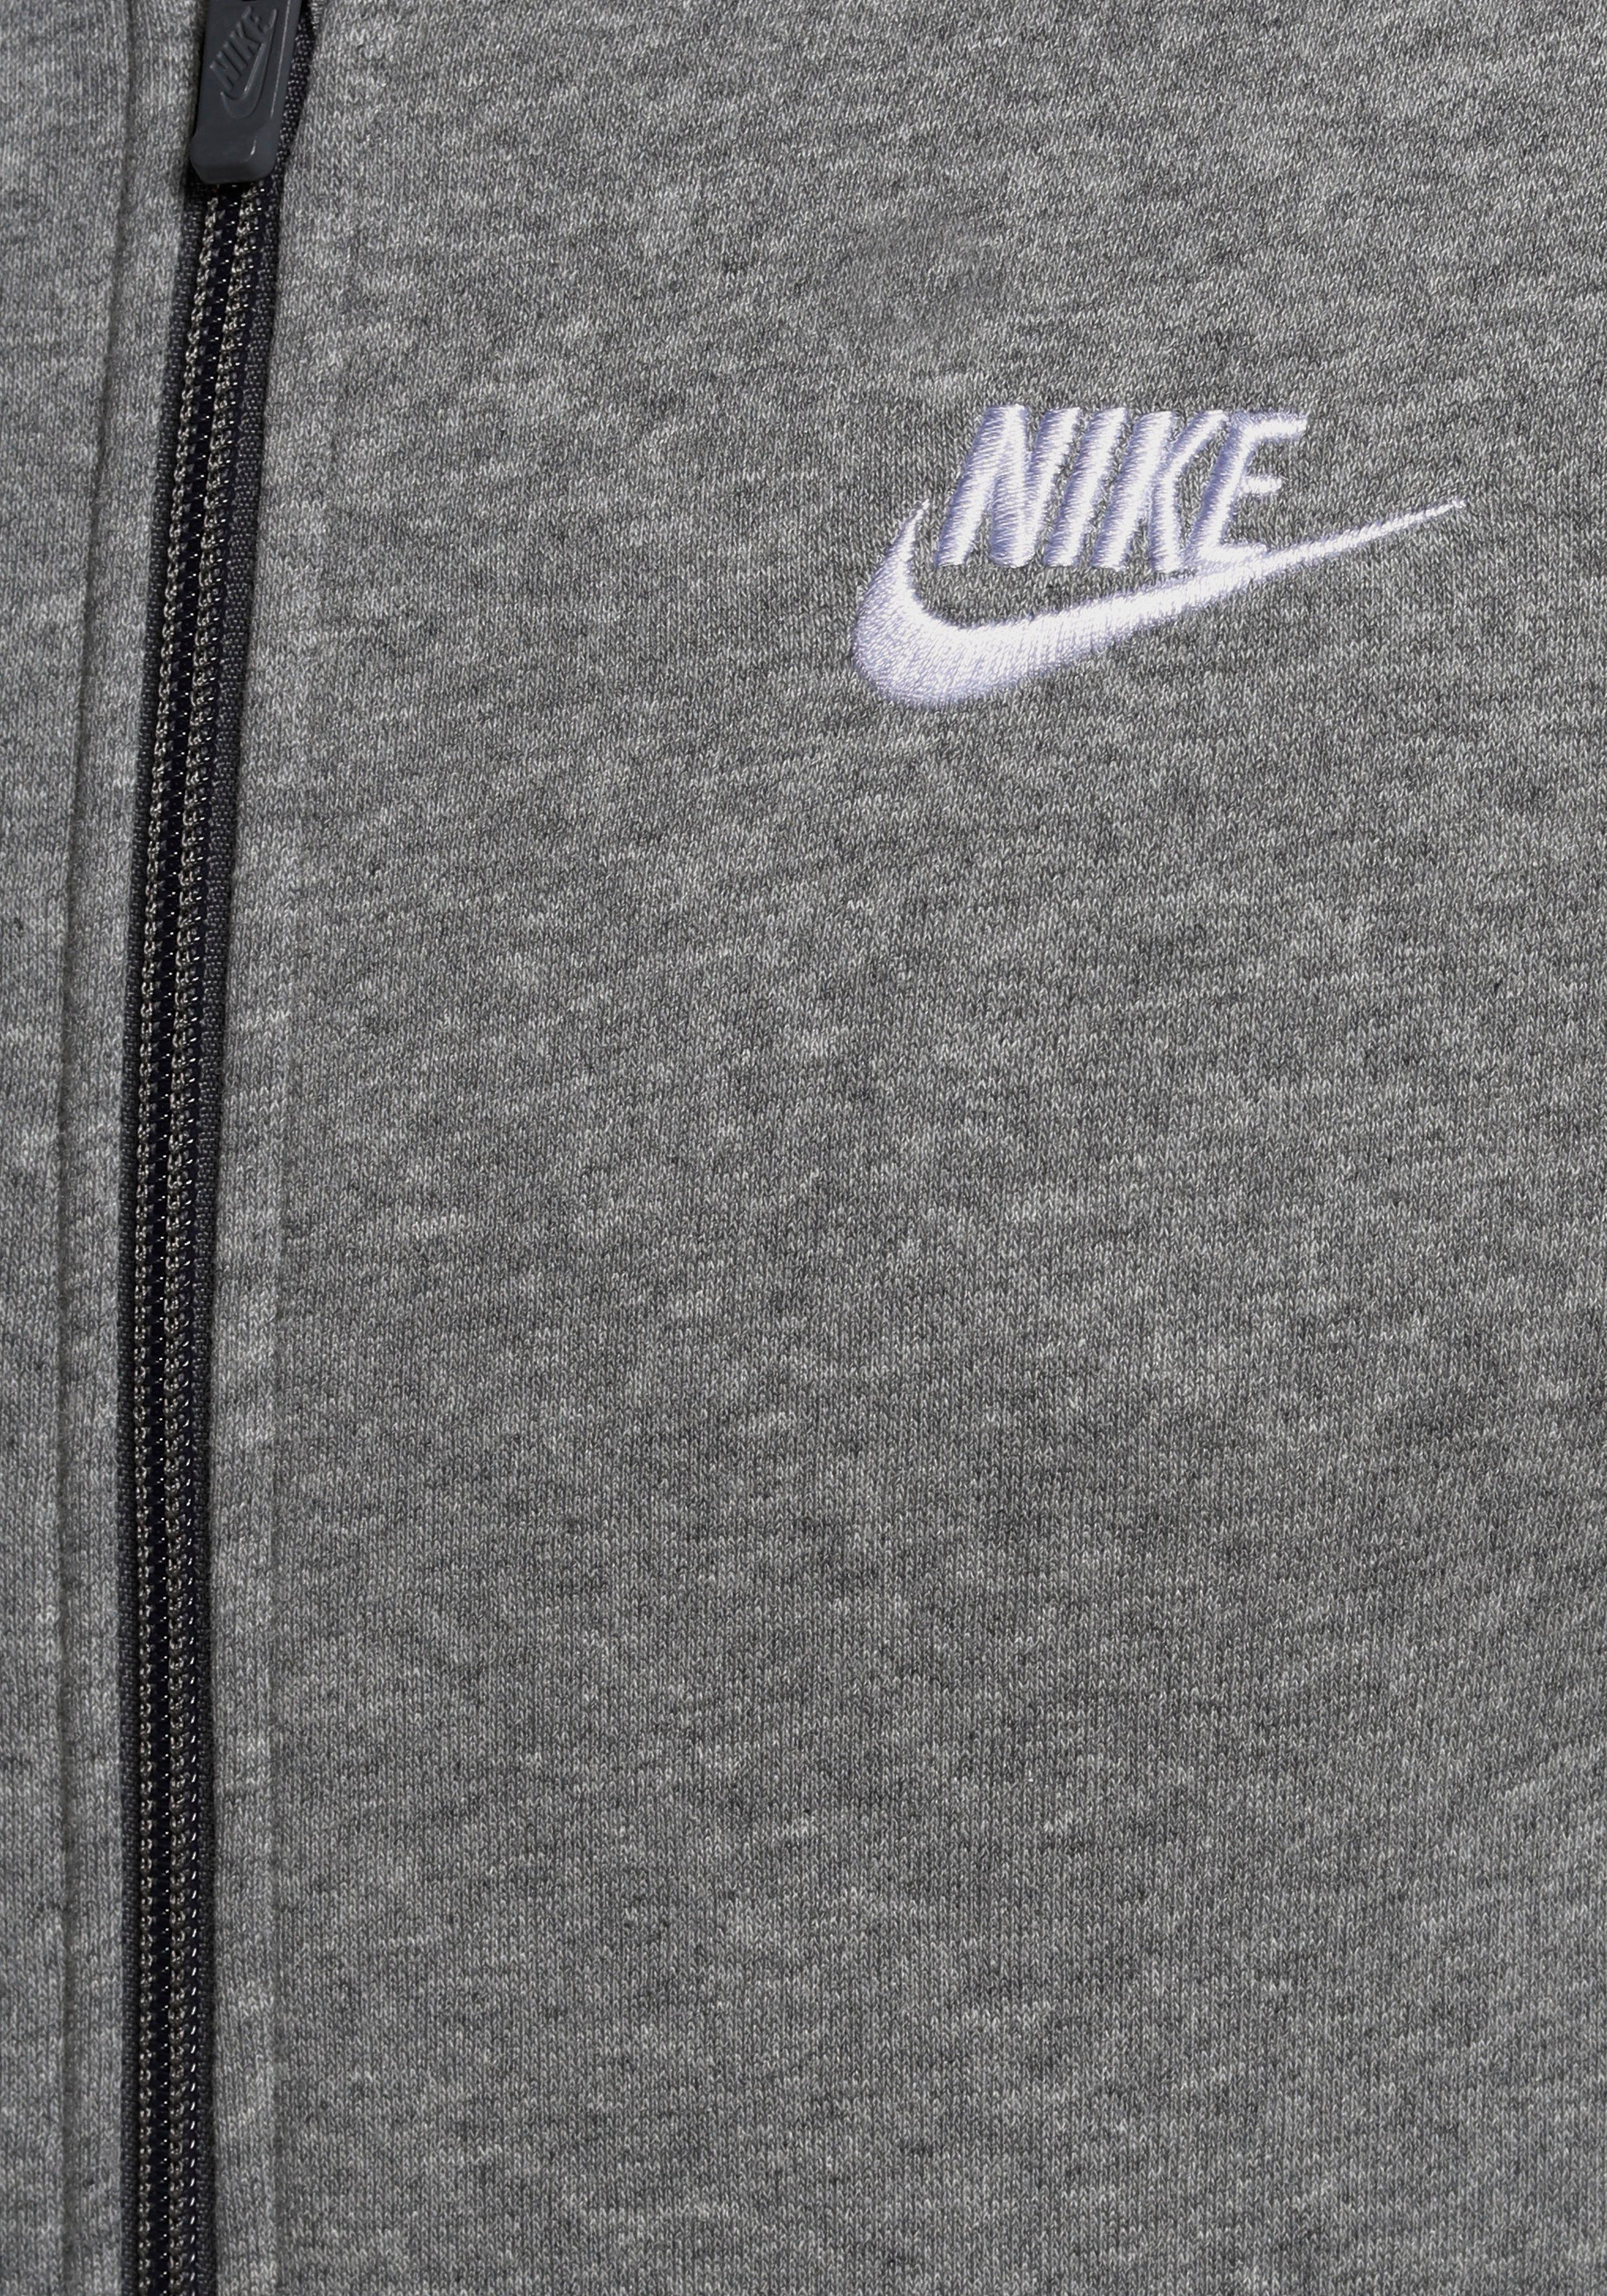 für Nike 2-tlg), Sportswear Jogginganzug grau-meliert CORE (Set, NSW Kinder